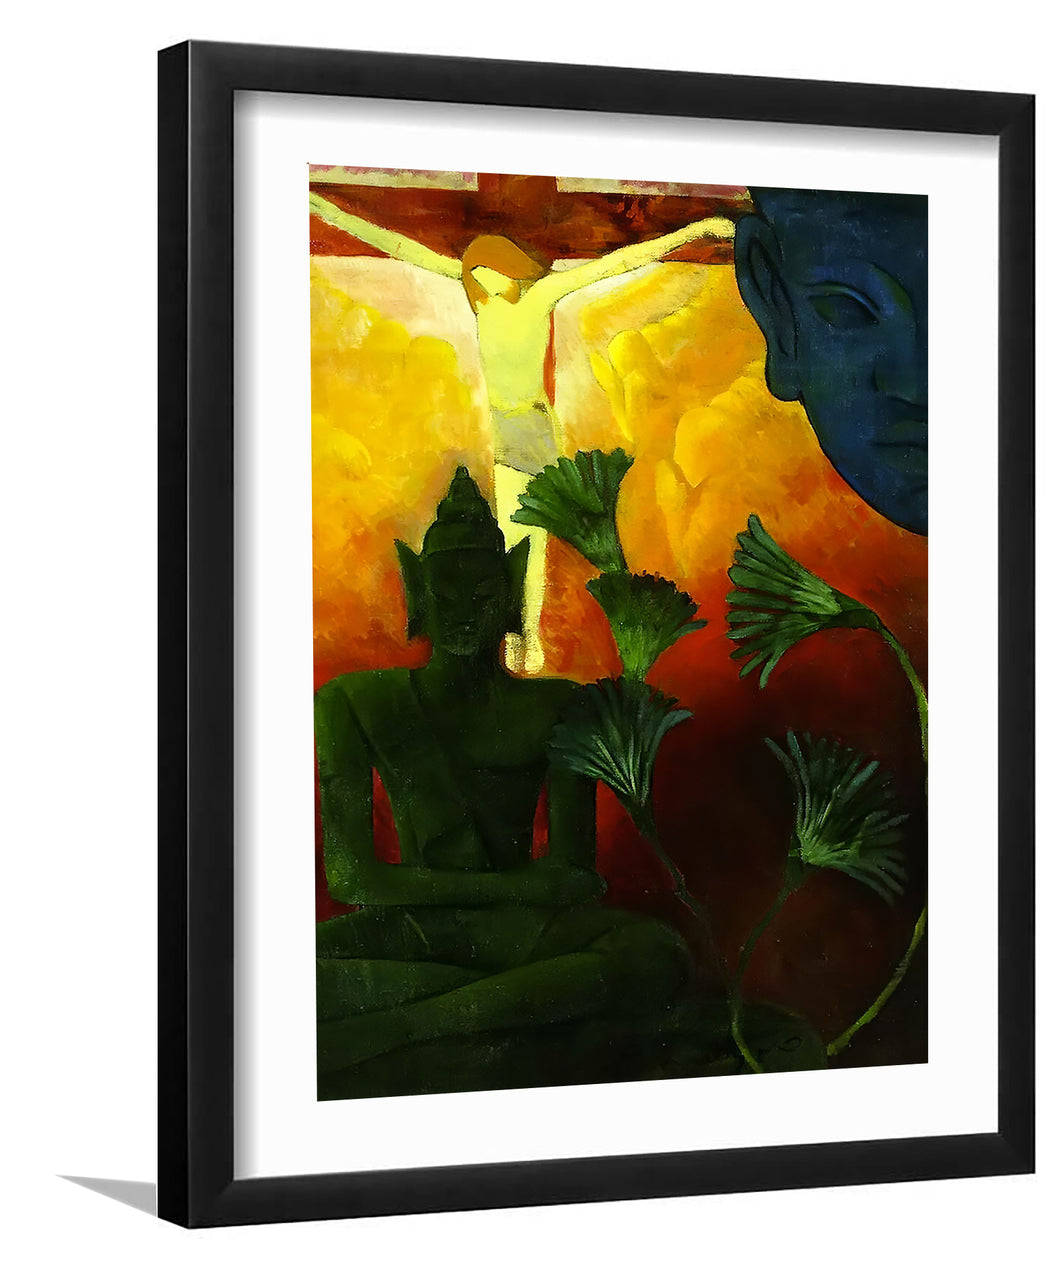 Christ And Buddha By Paul Ranson - Framed Prints, Painting Art, Art Print, Framed Art, Black Frame